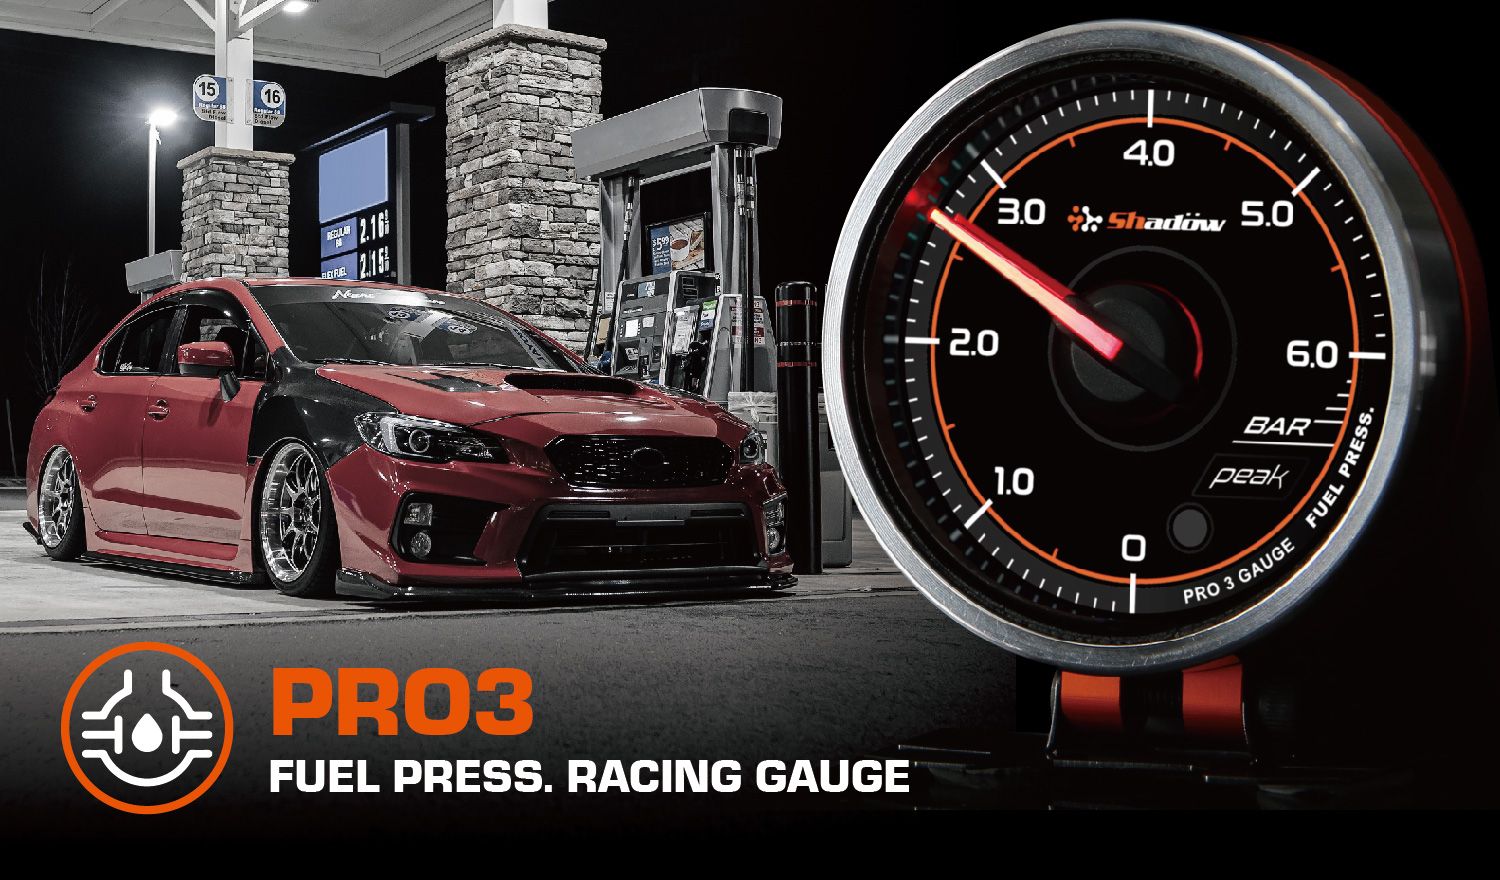 Fuel Pressure racing gauge measurement range is from 0 Bar to 6 Bar.